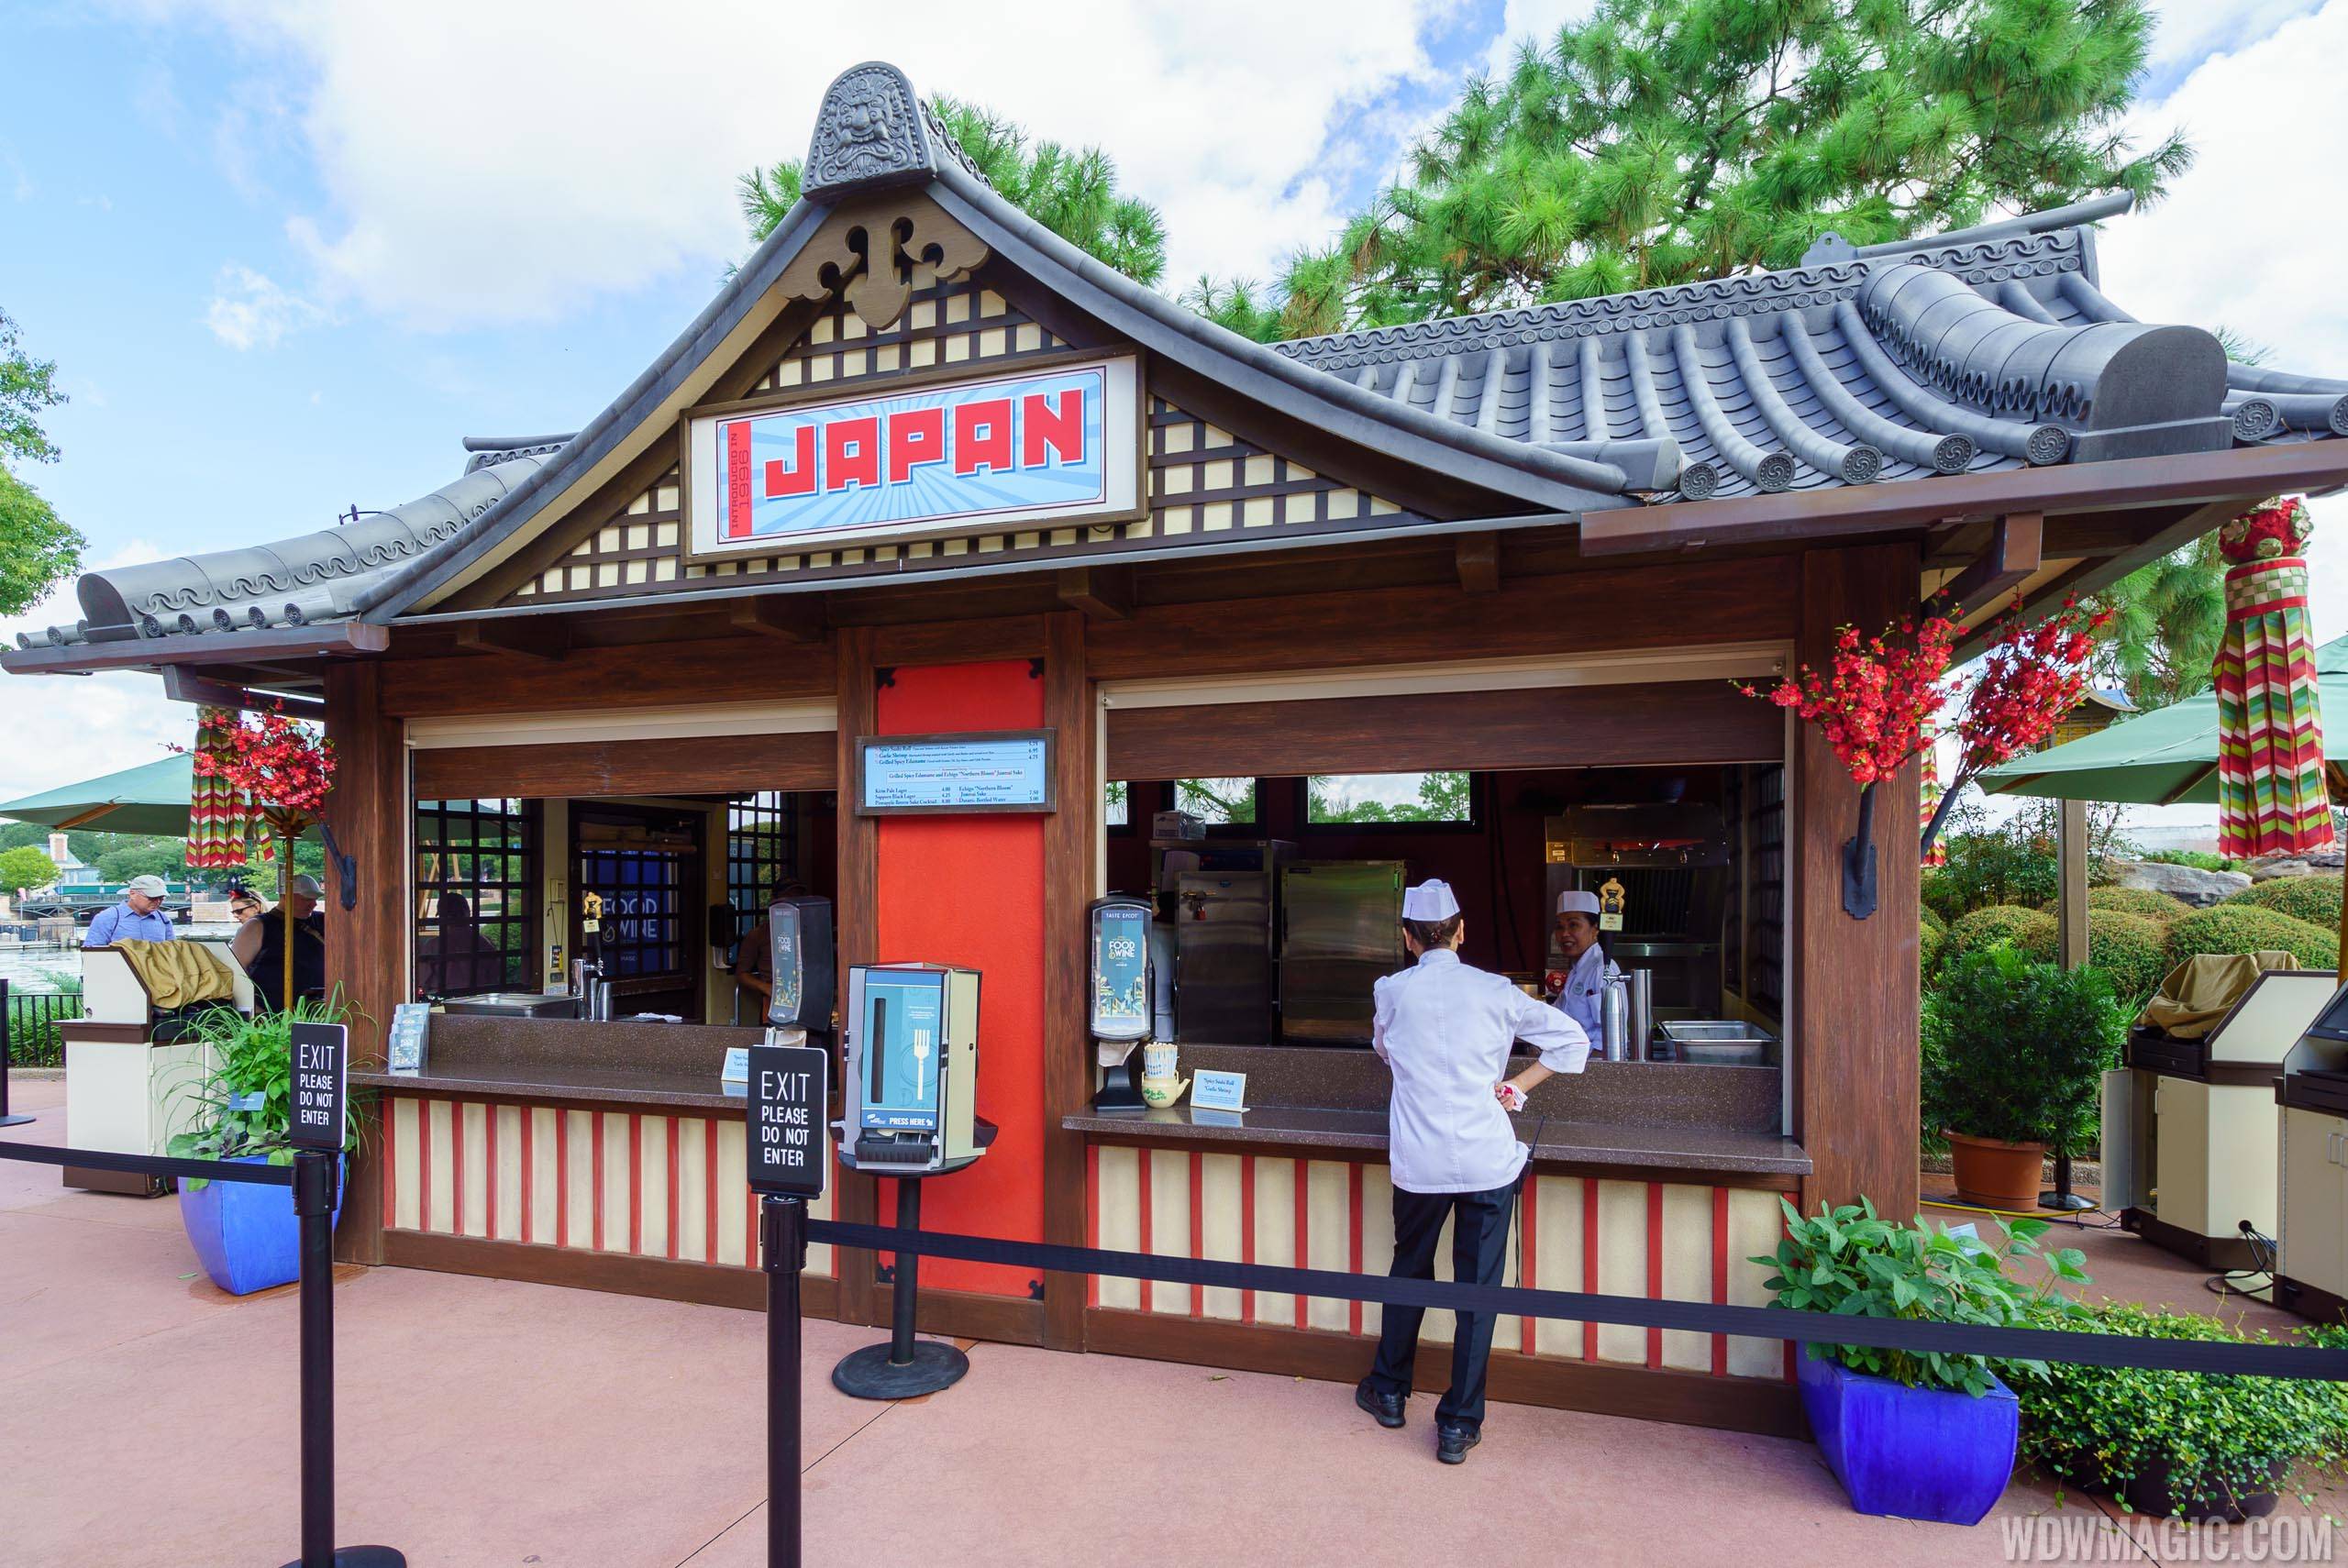 2016 Epcot Food and Wine Festival - Japan kiosk